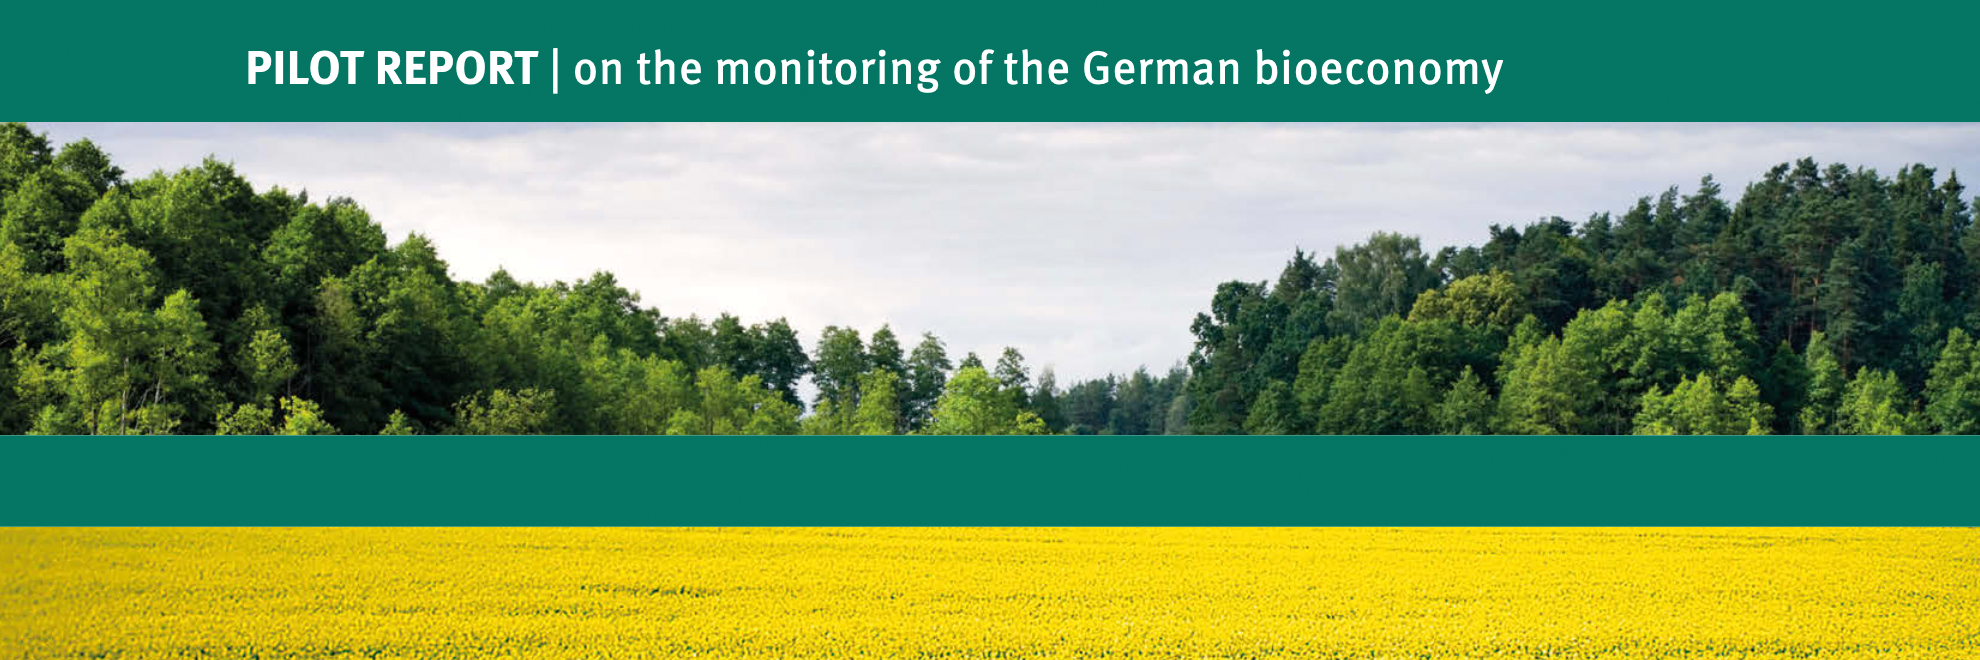 The pilot report: monitoring bioeconomy.